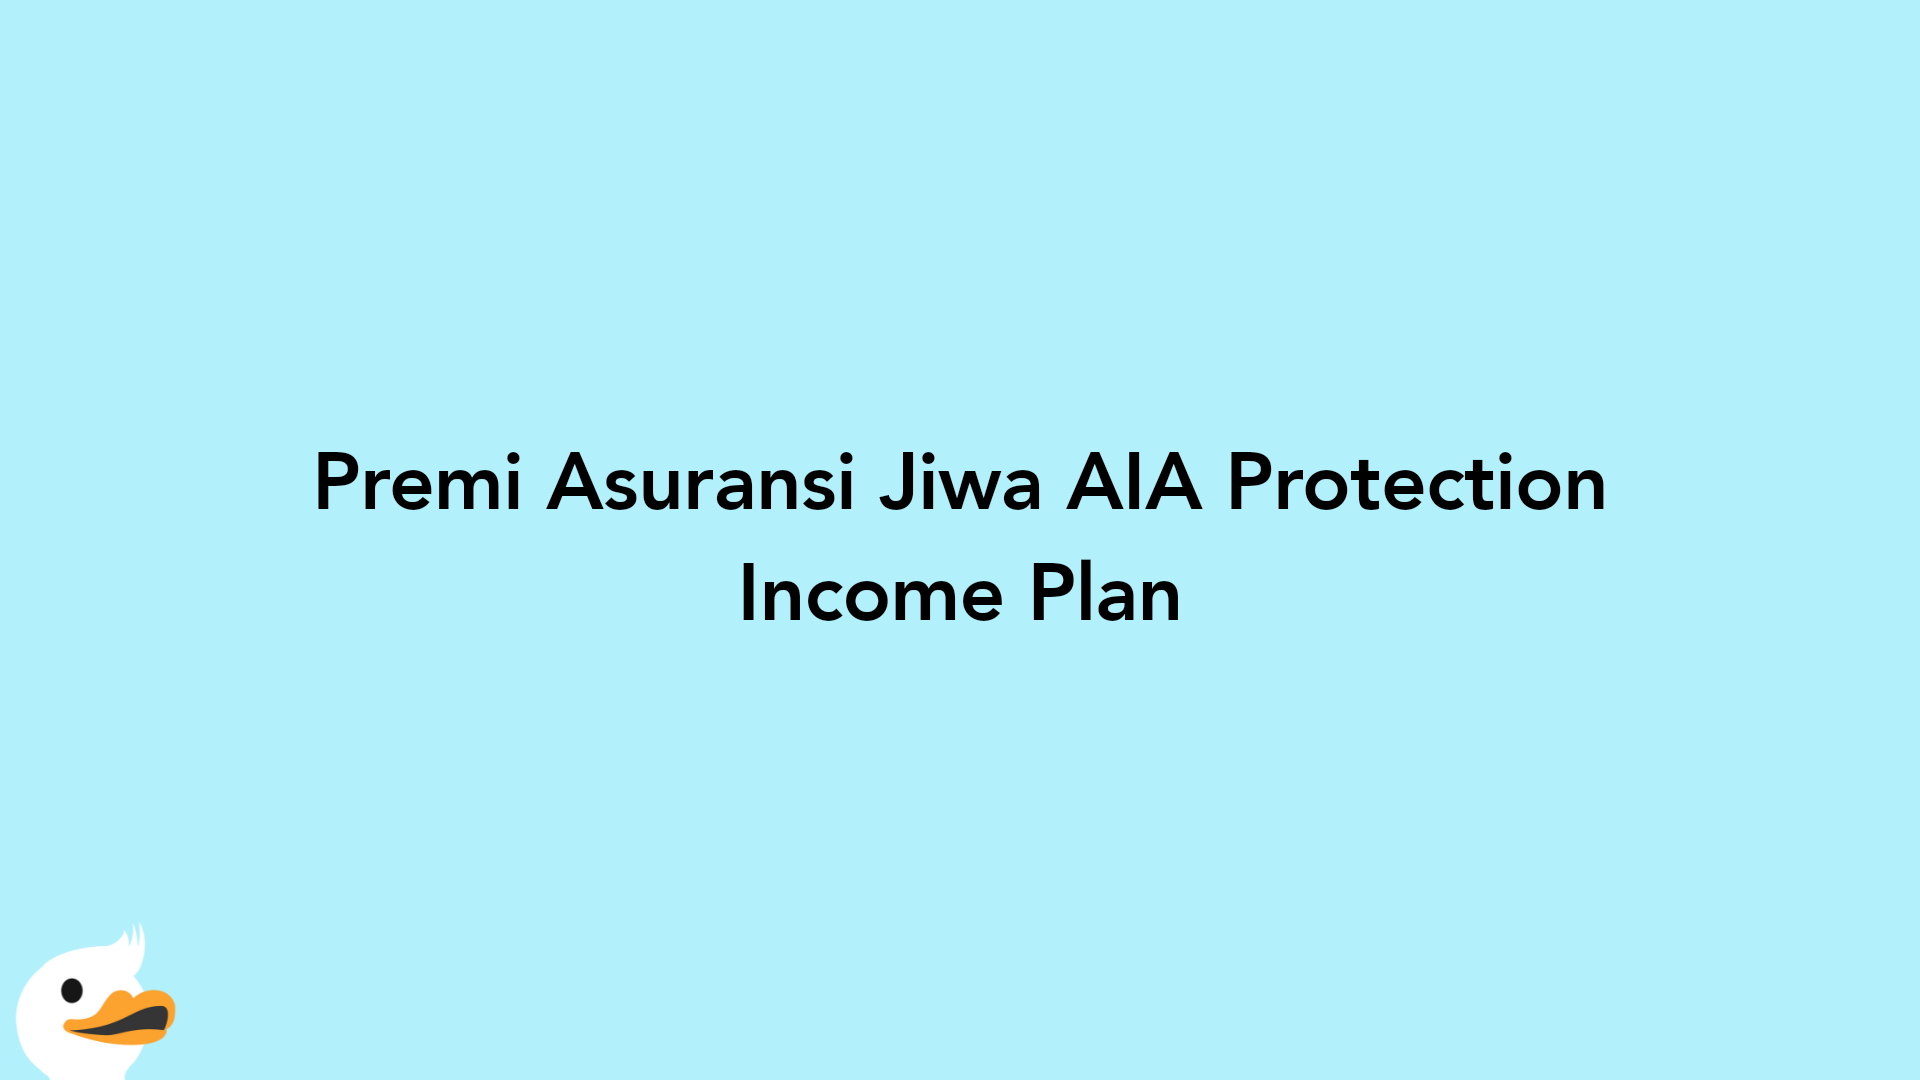 Premi Asuransi Jiwa AIA Protection Income Plan